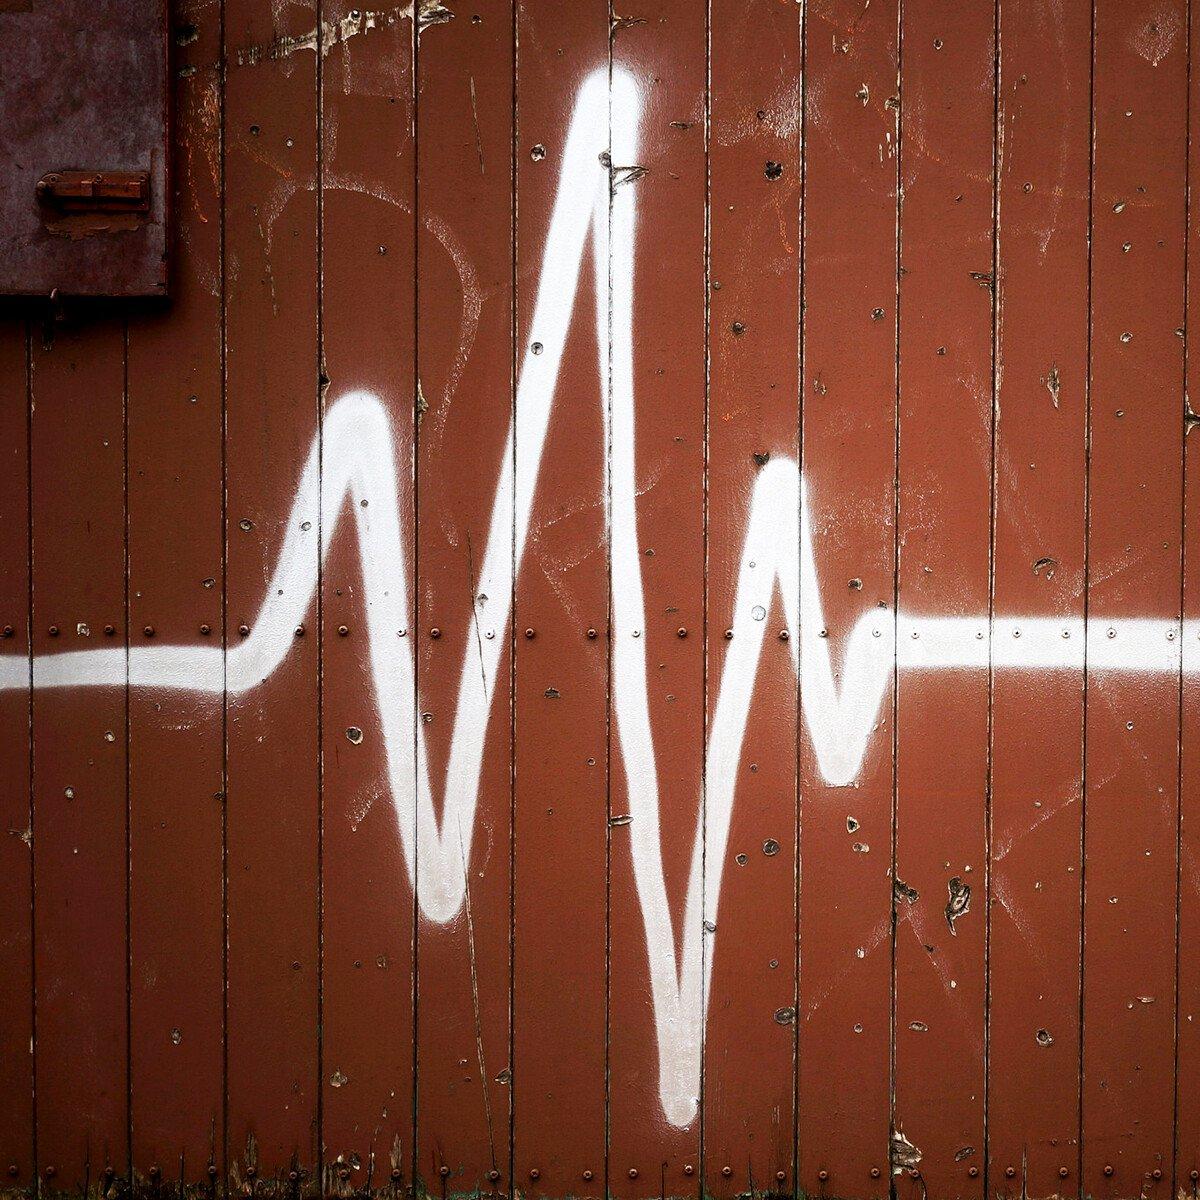 Graffiti of ECG reading on a wall